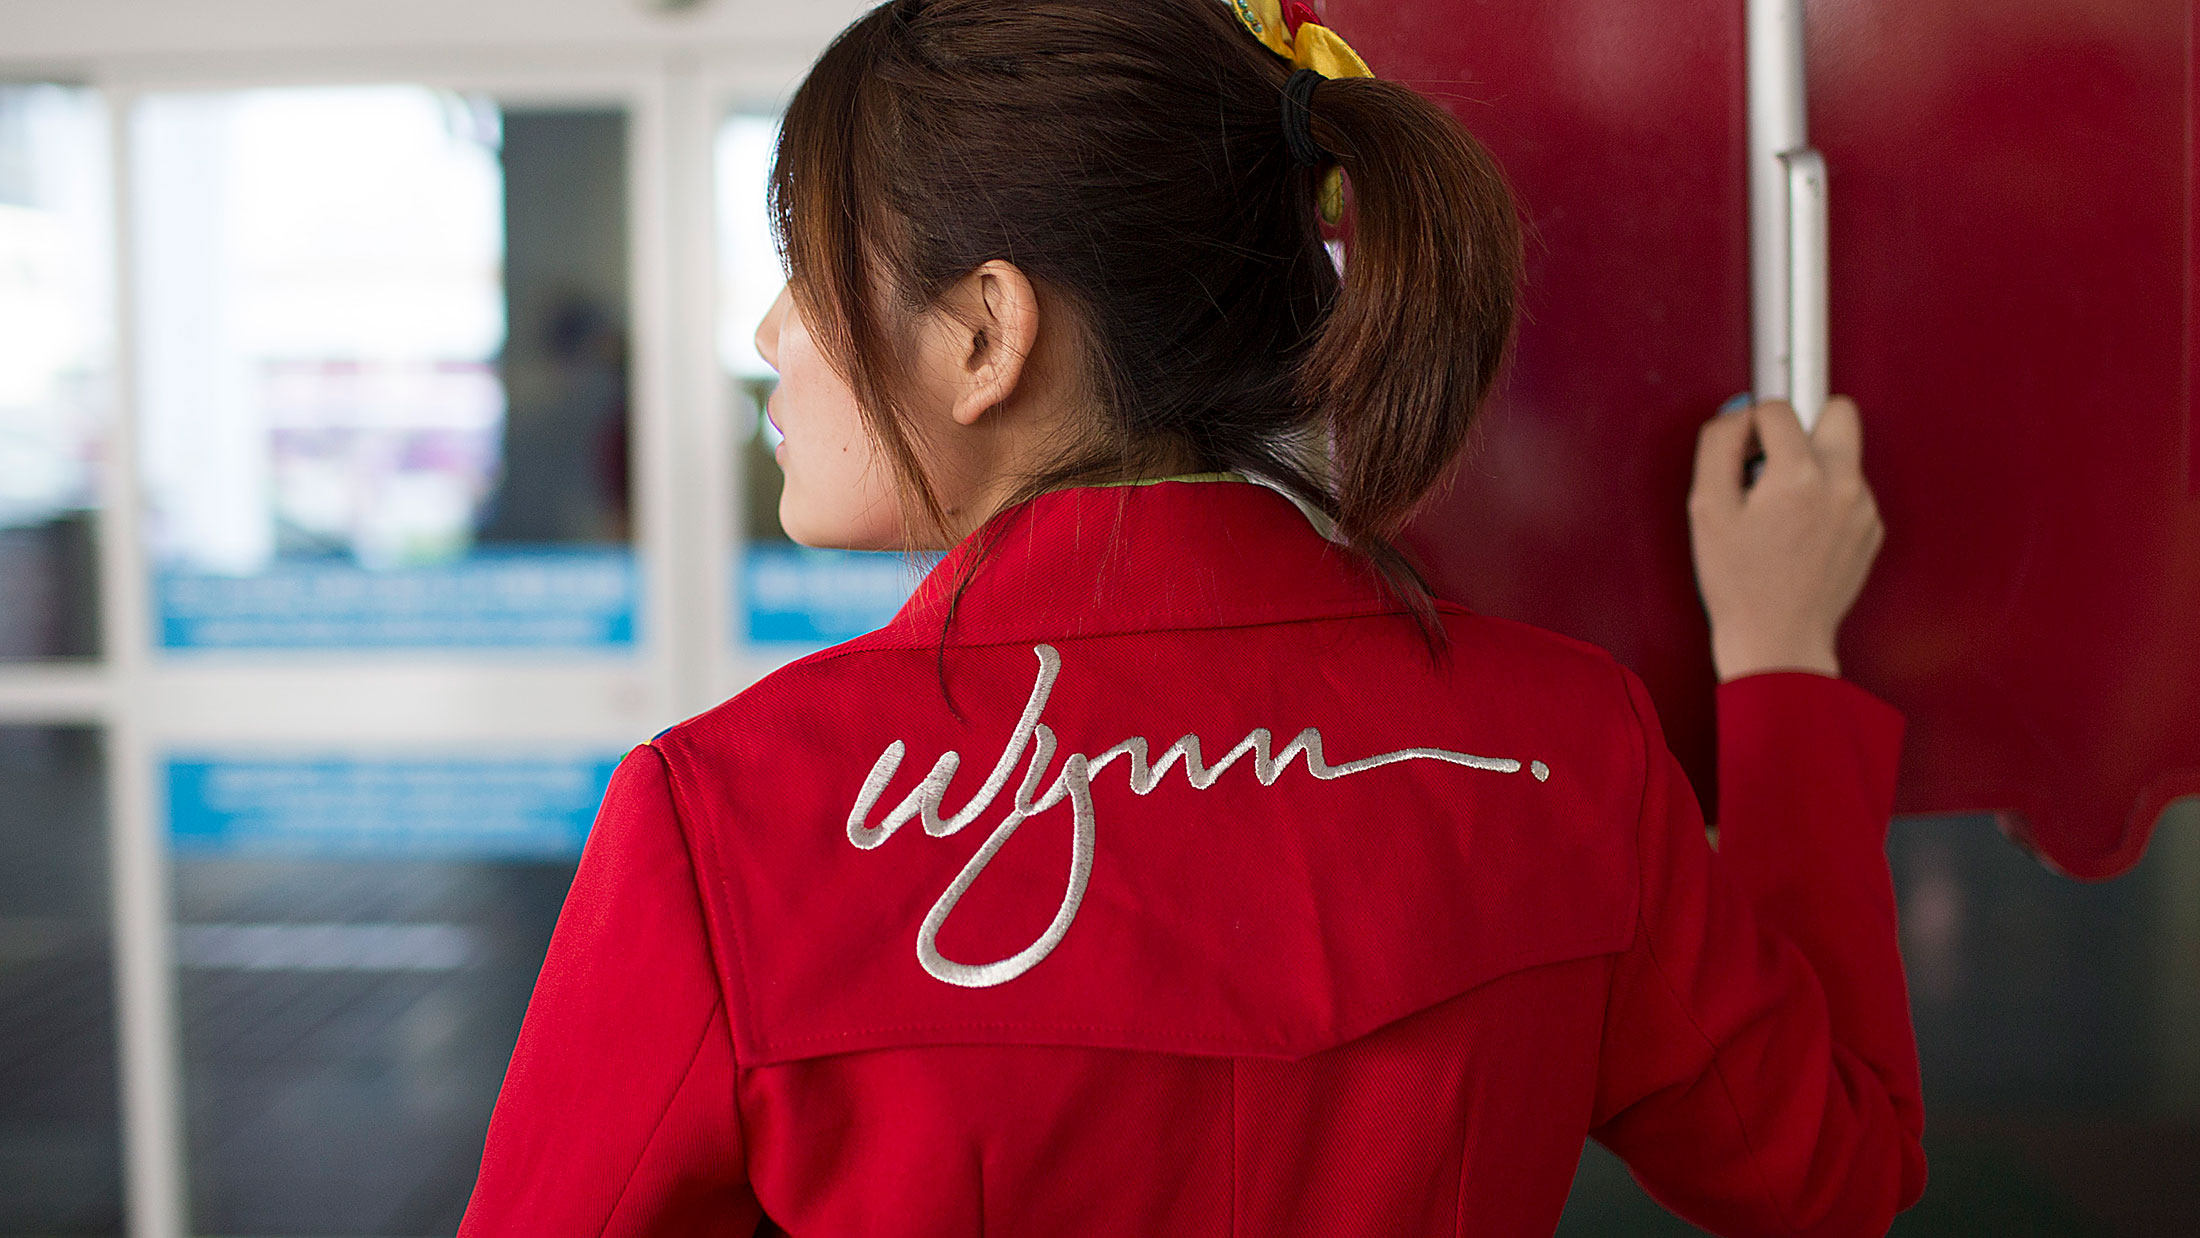 An employee holds a sign for Wynn Macau casino resort outside the ferry terminal in Macau, China.
